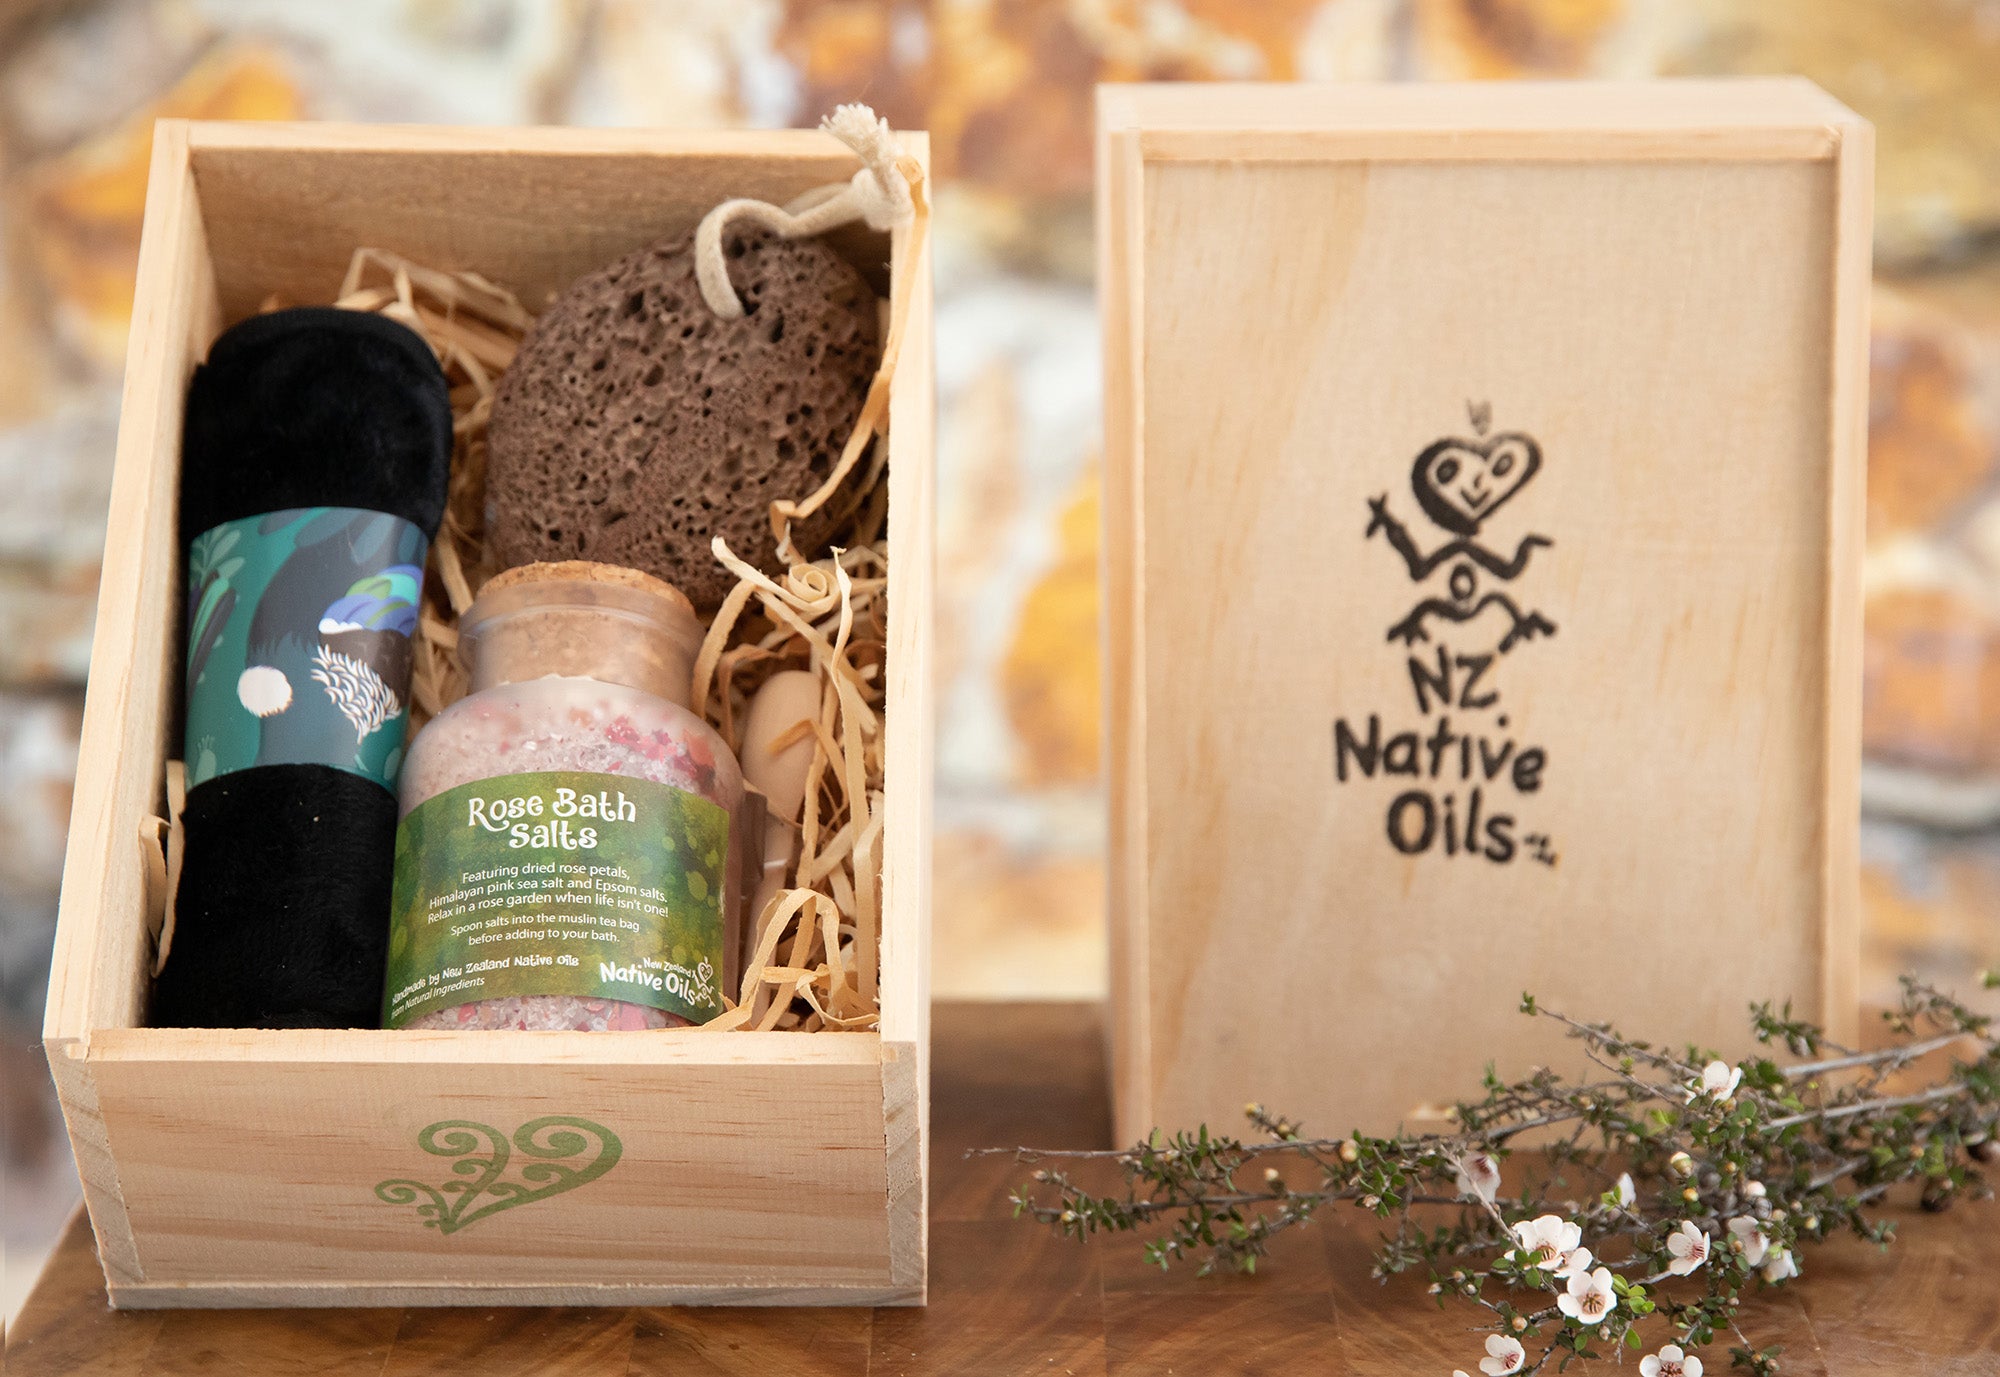 Rose Bath Salts Gift Box-NZ Native Oils Ltd